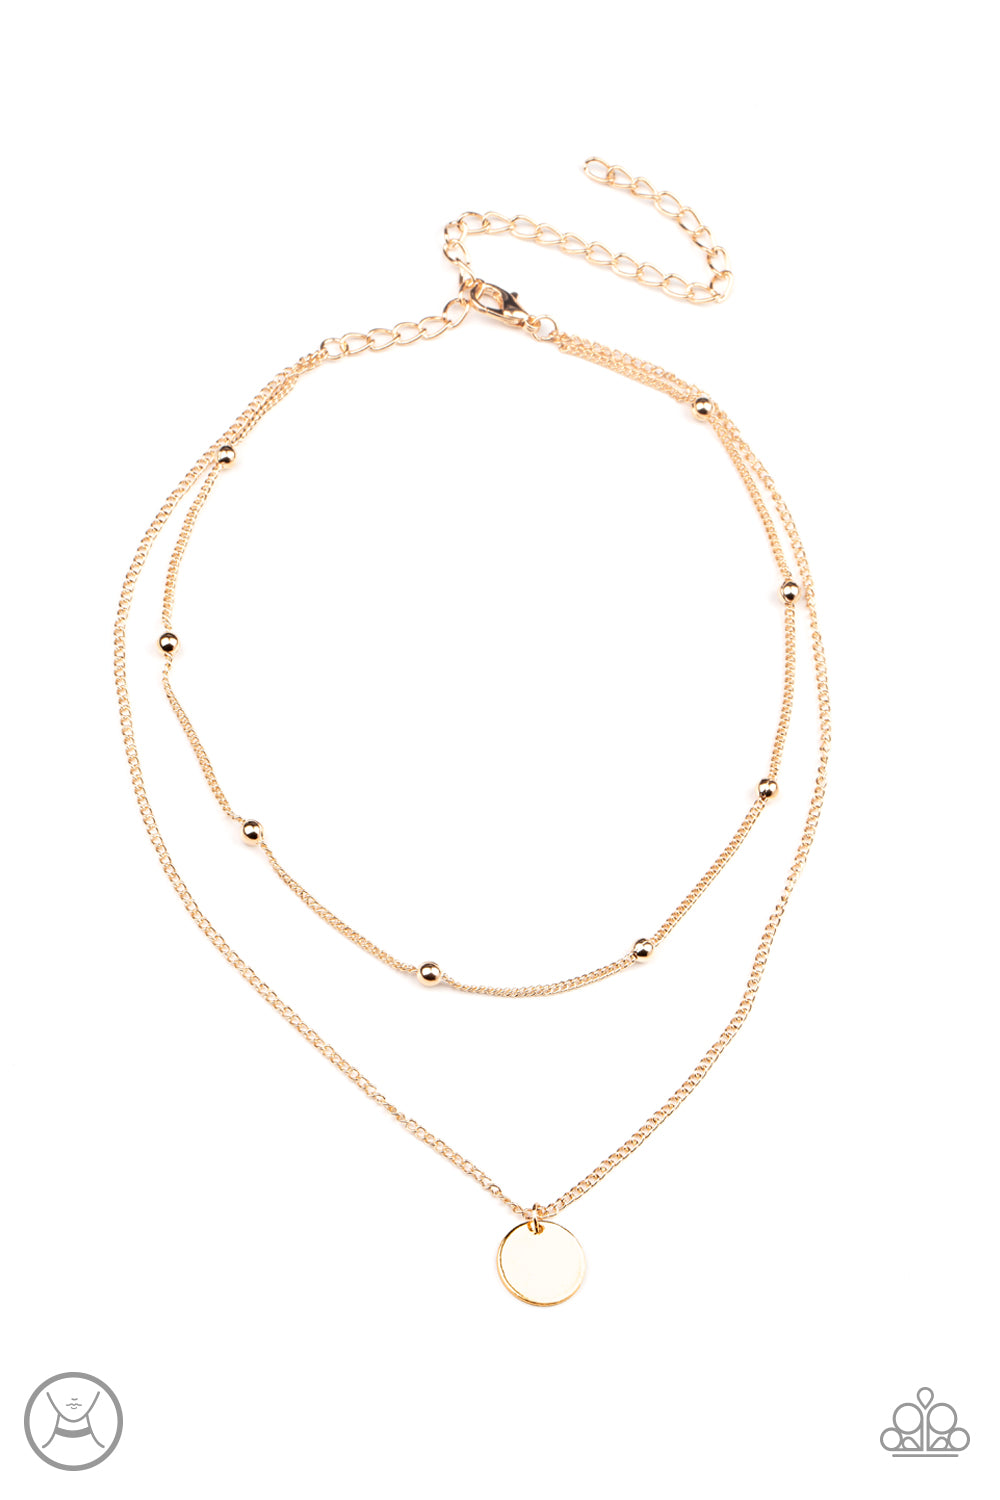 Modestly Minimalist - Gold Choker Necklace freeshipping - JewLz4u Gemstone Gallery